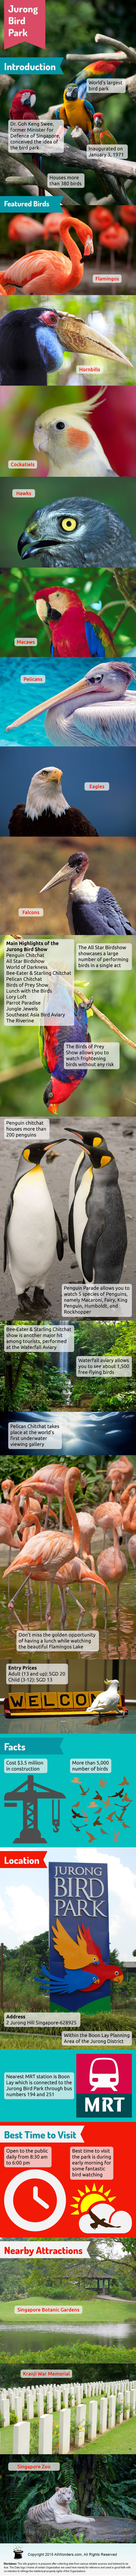 Jurong Bird Park - Facts & Infographic